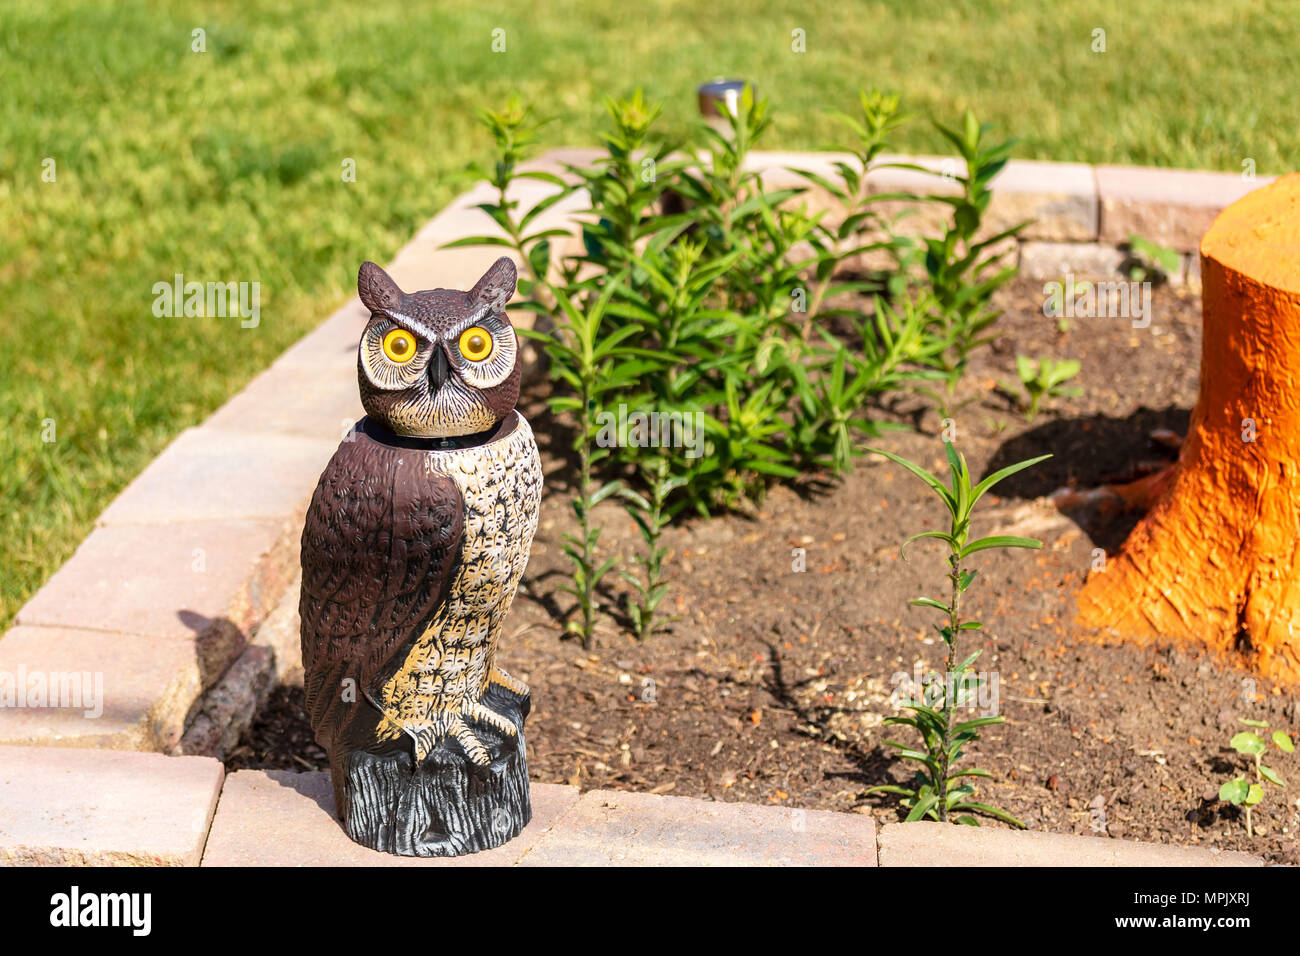 El cimbel woodsy owl proteger las plantas de jardín Foto de stock